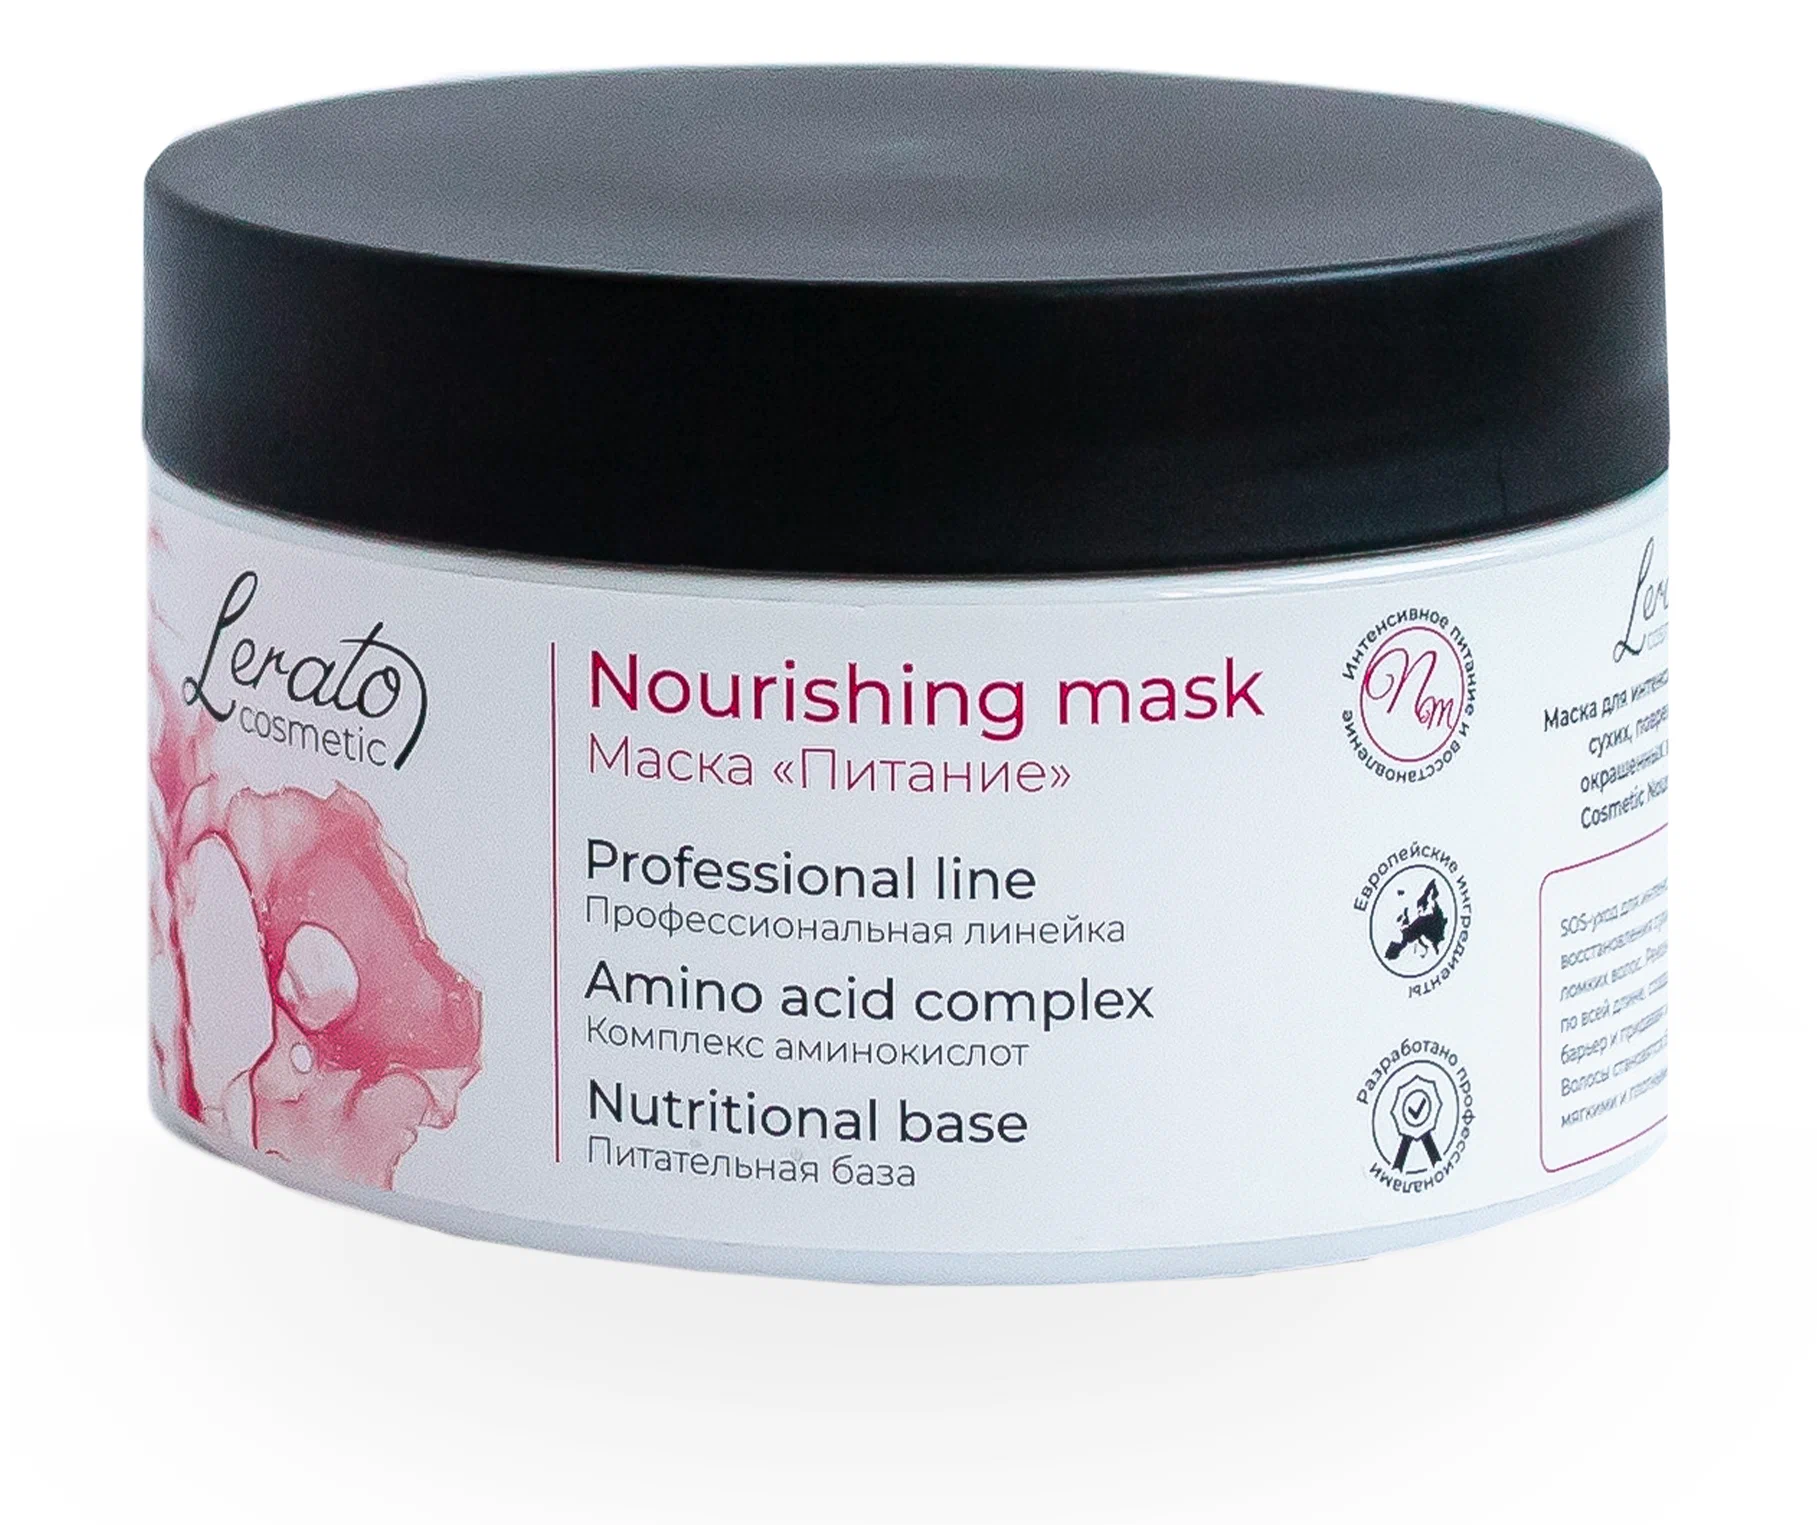 Питательная маска Lerato Cosmetic Nourishing Mask, 300 мл